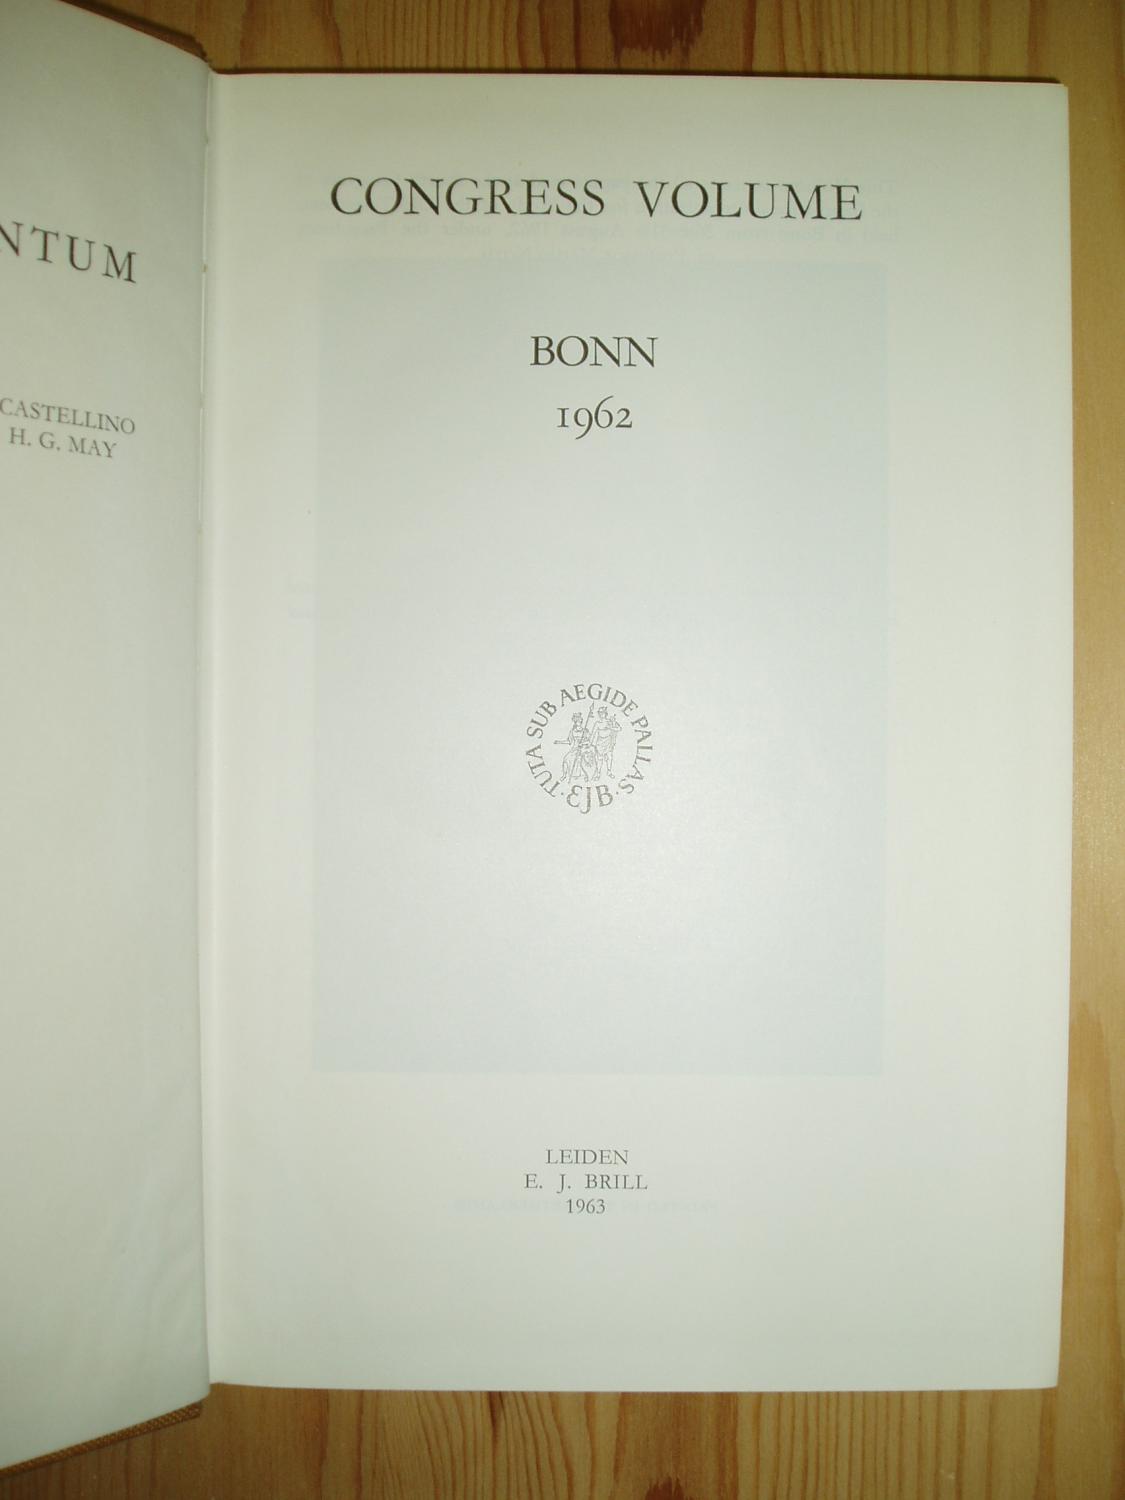 Congress Volume : Bonn 1962 - International Organization for the Study of the Old Testament [ Anderson, G.W.; et al: editors: ]